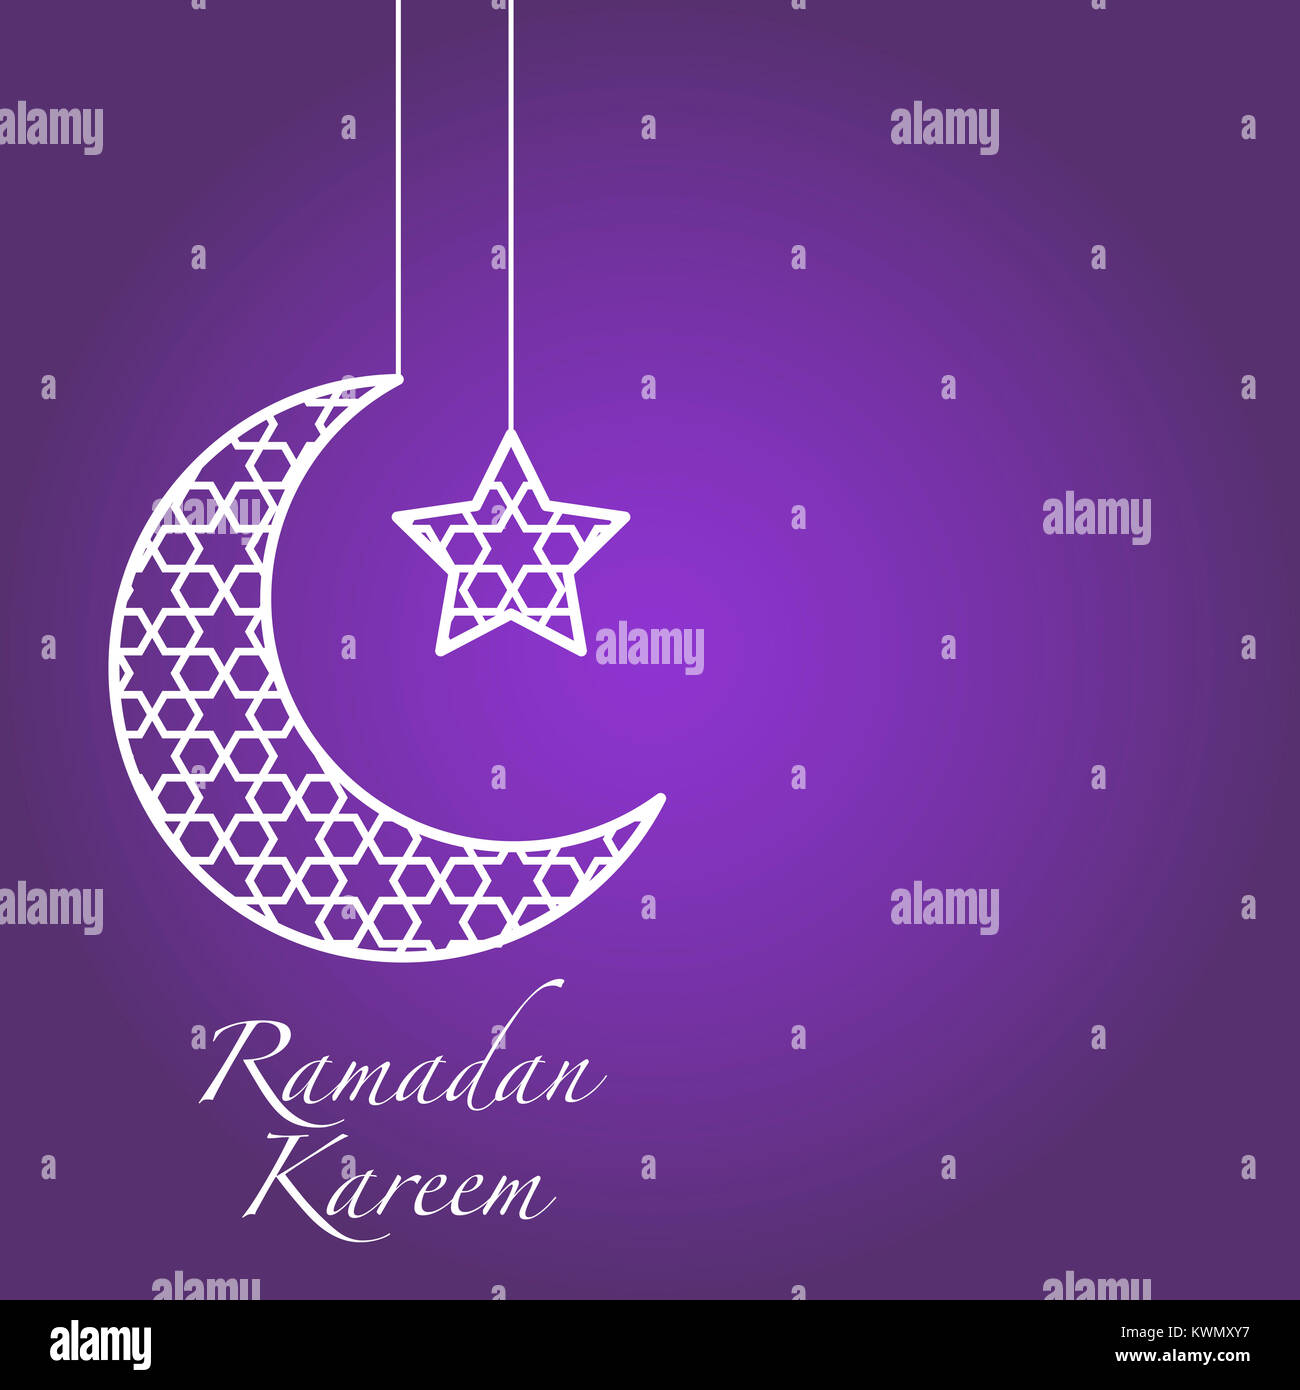 Ramadam Kareem moon and star illustration Stock Photo